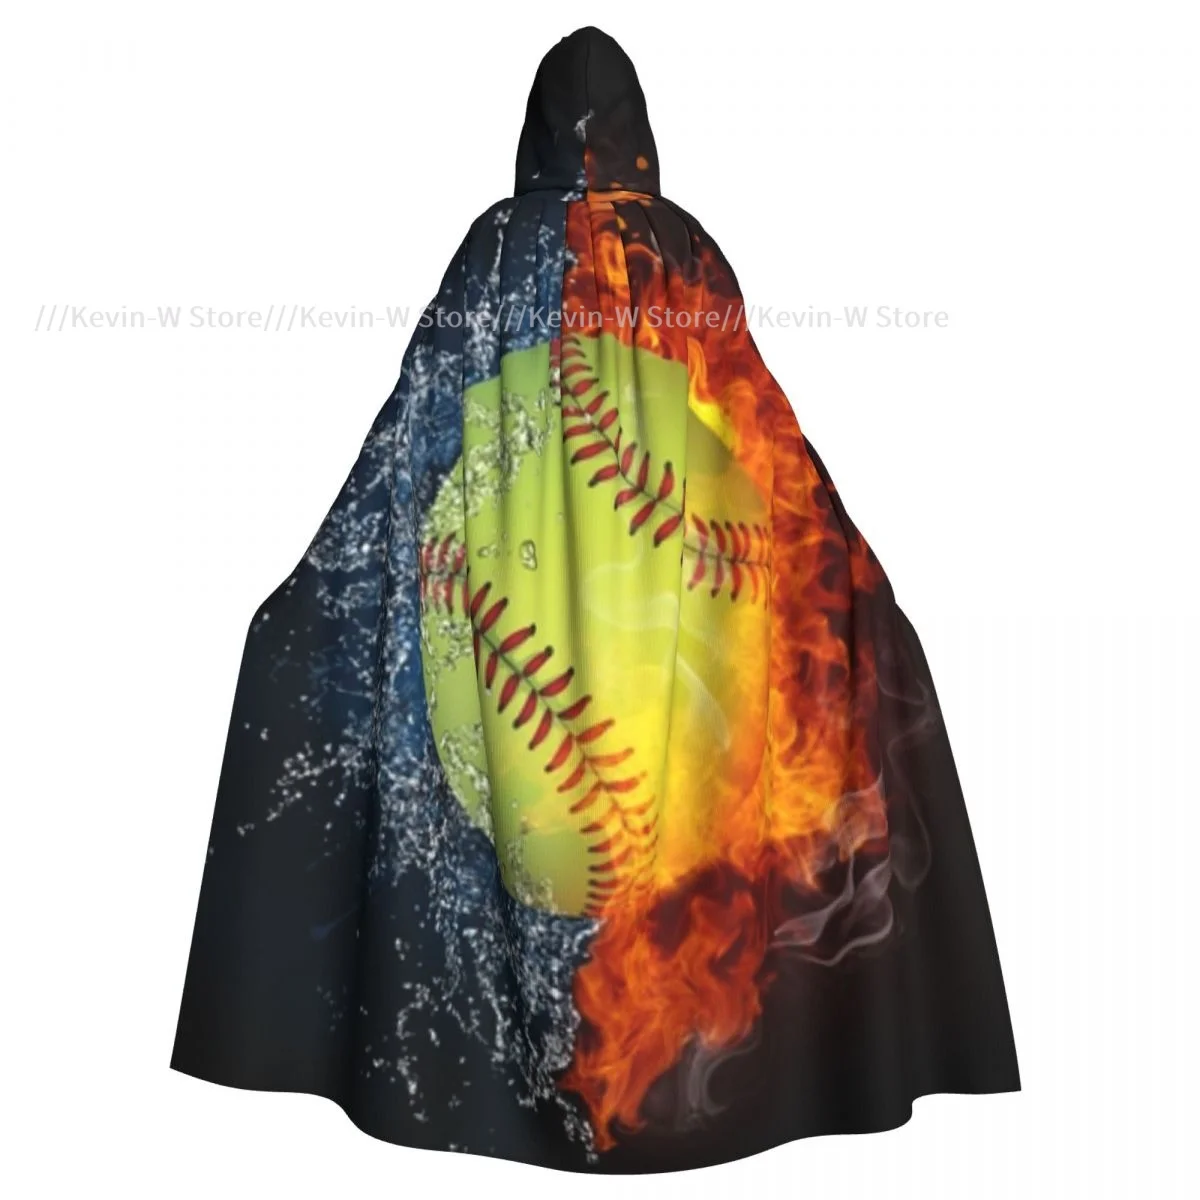 

Hooded Cloak Unisex Cloak with Hood Baseball Softball Ball Cloak Vampire Witch Cape Cosplay Costume